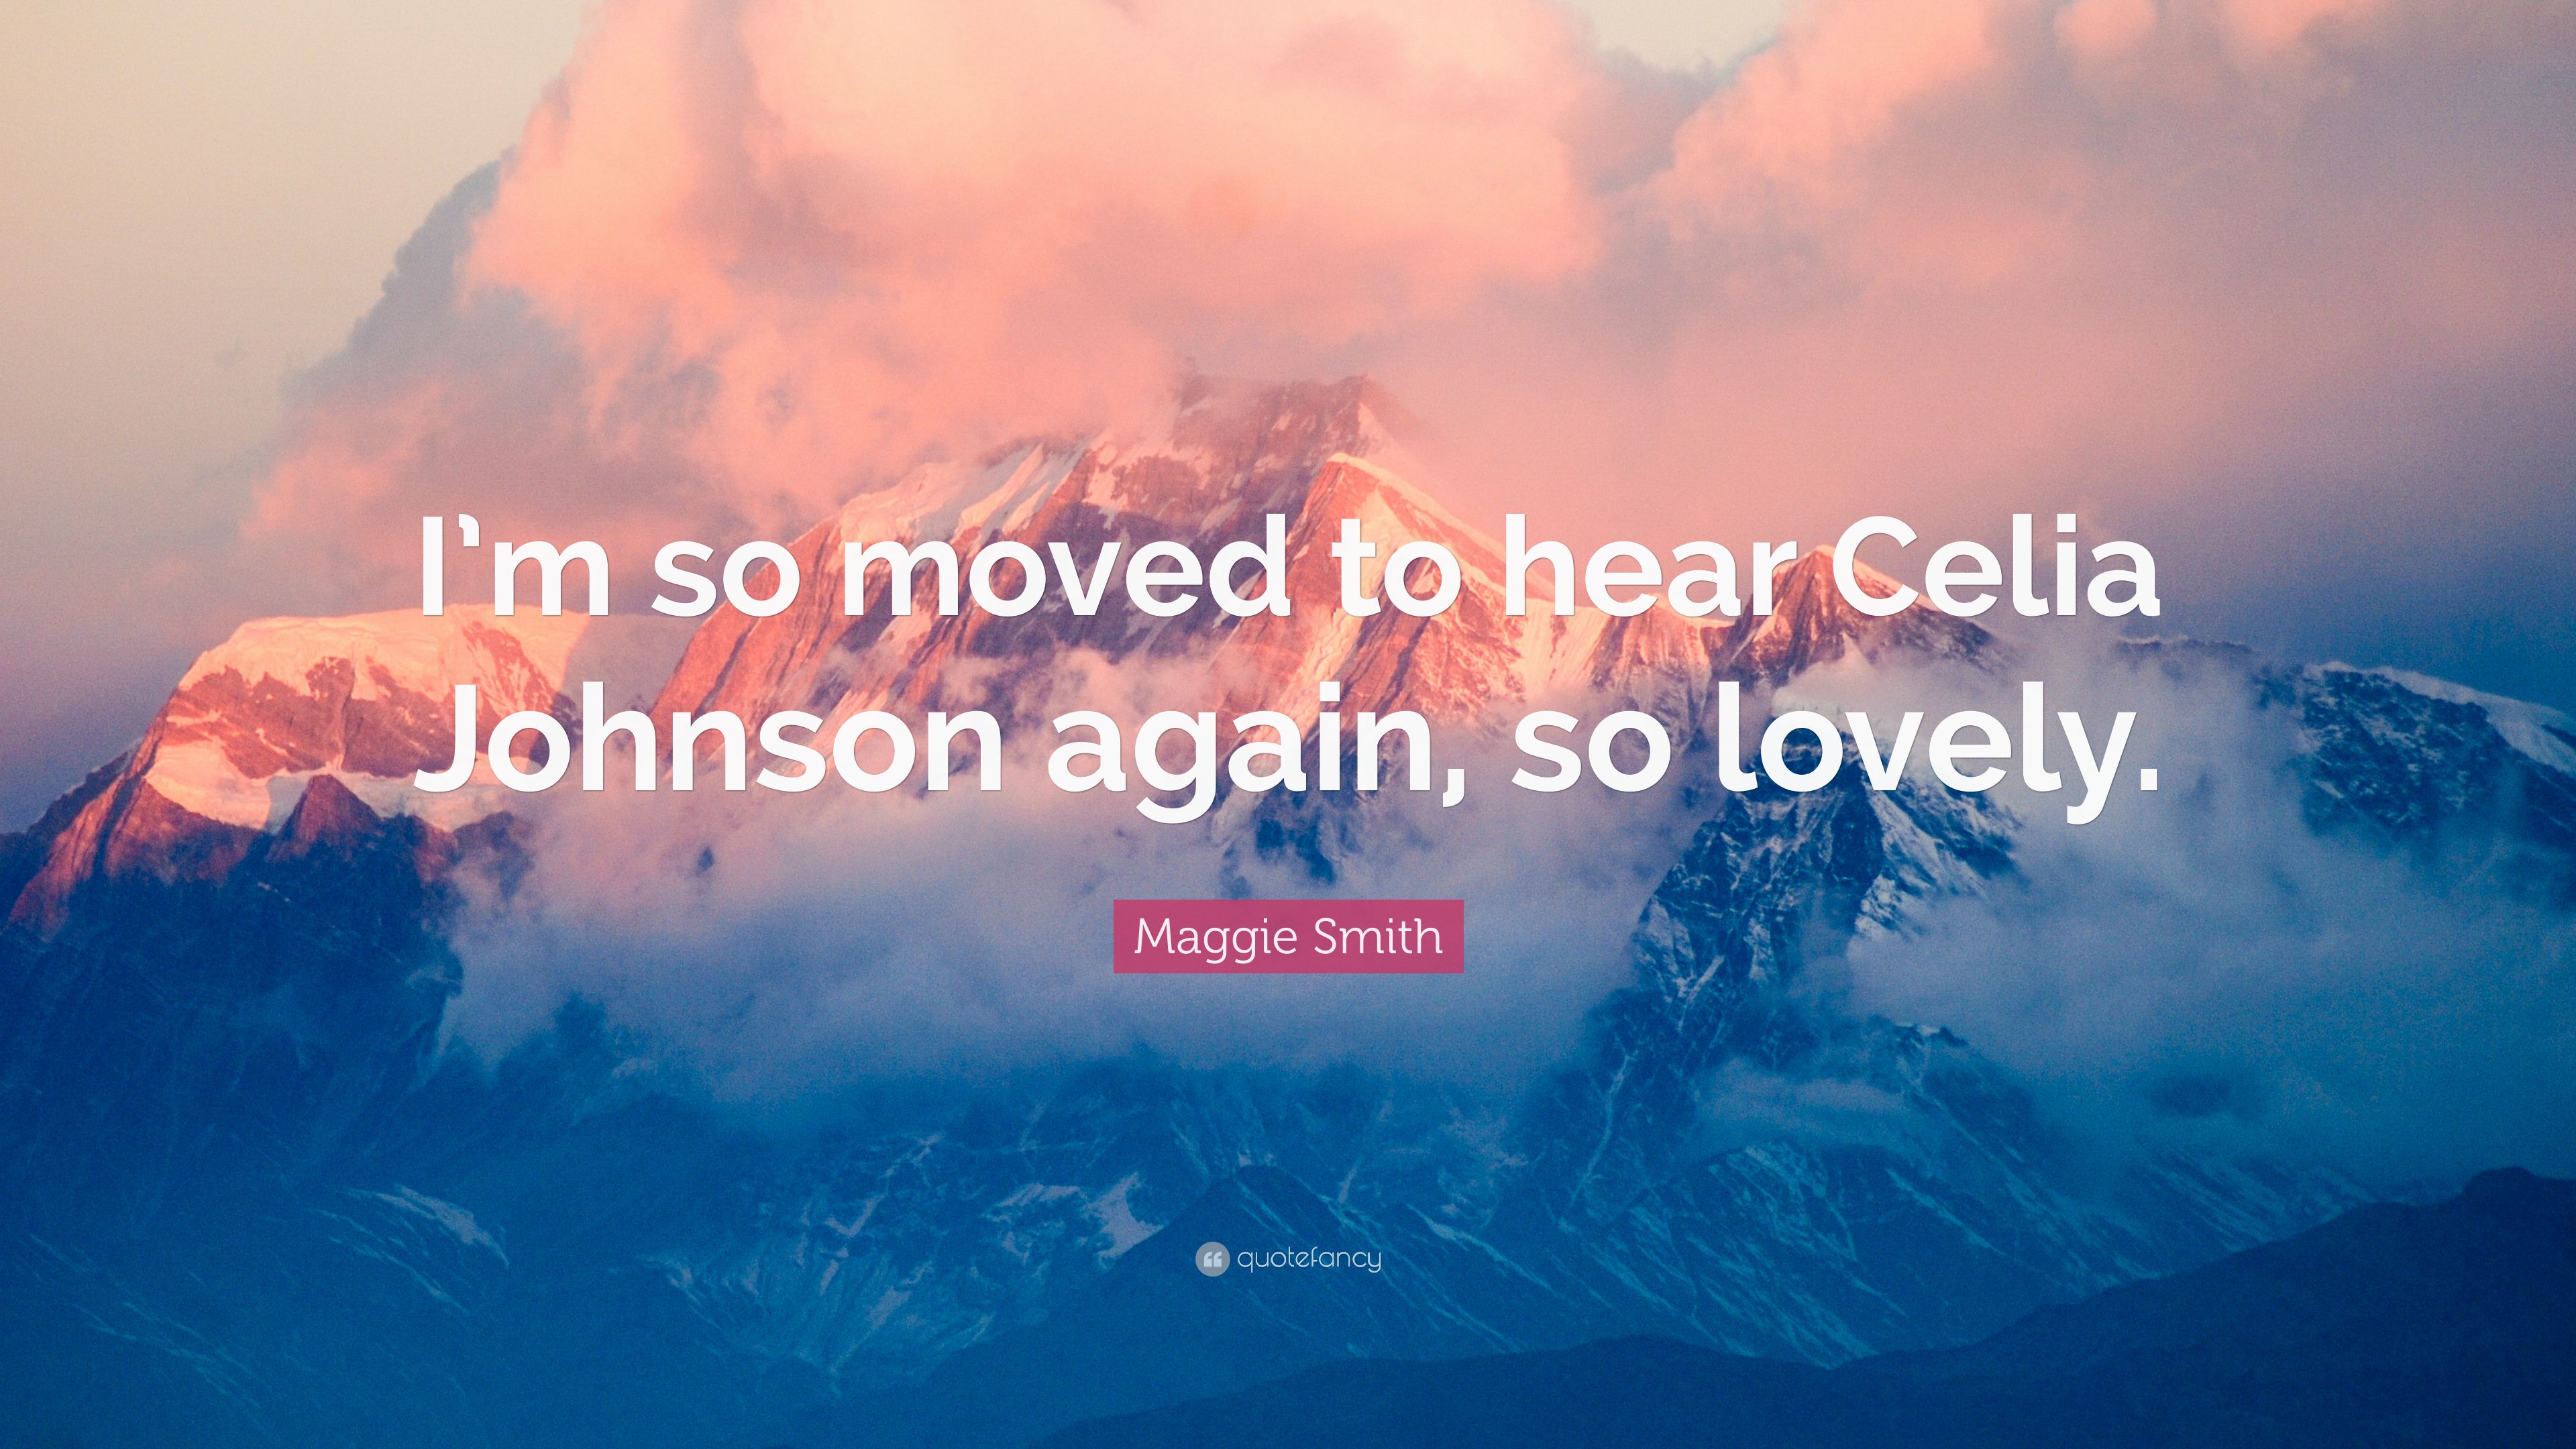 Maggie Smith Quote: “I'm so moved to hear Celia Johnson again, so